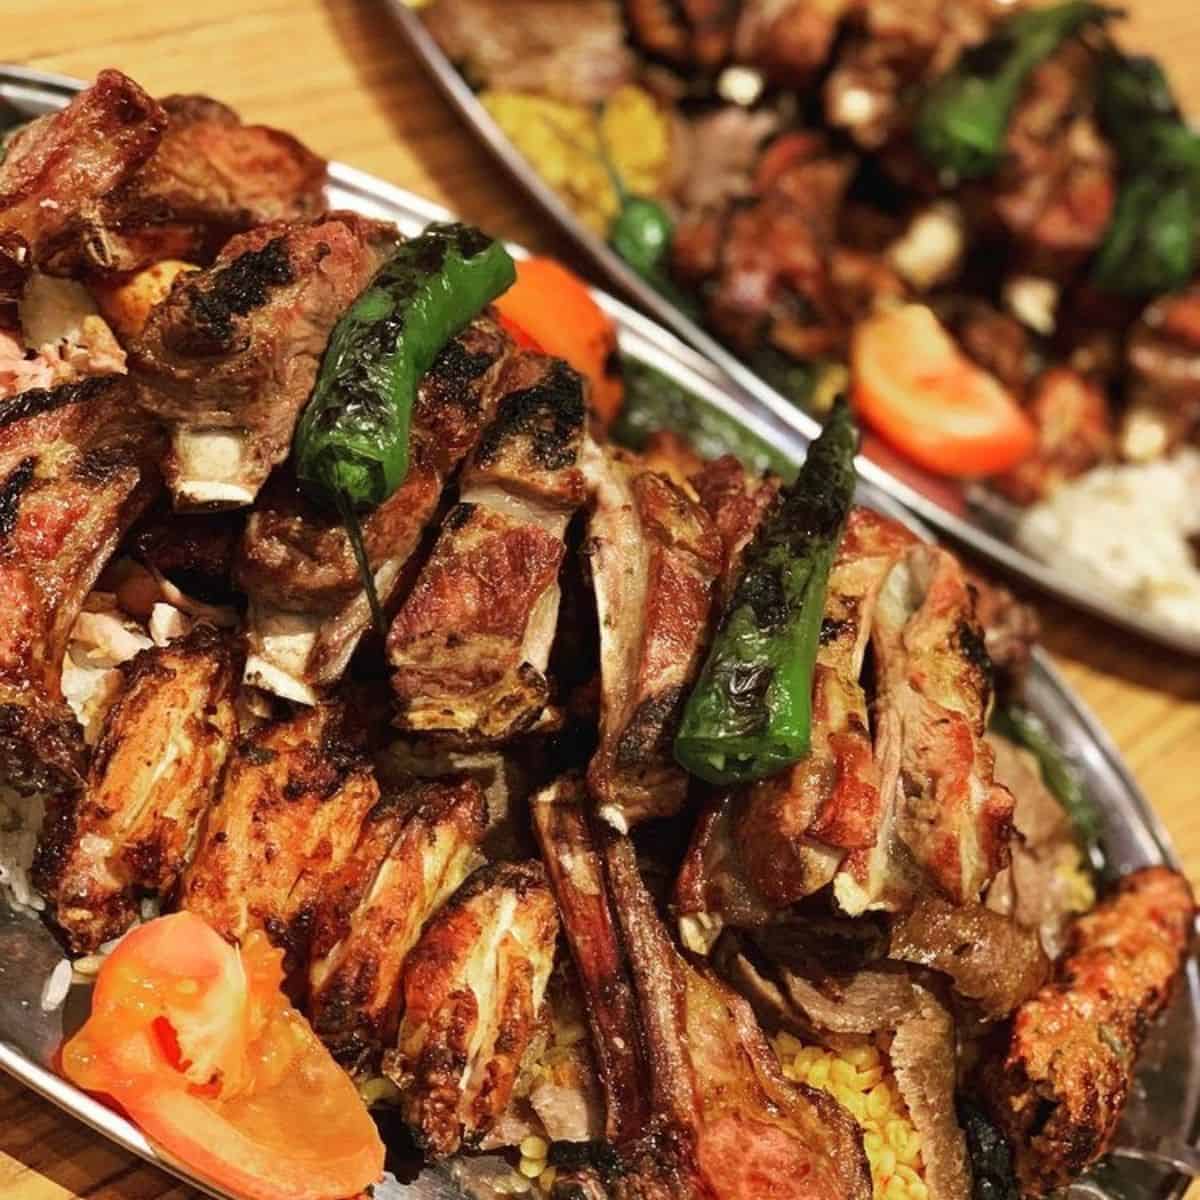 Taksim special mixed grill platter